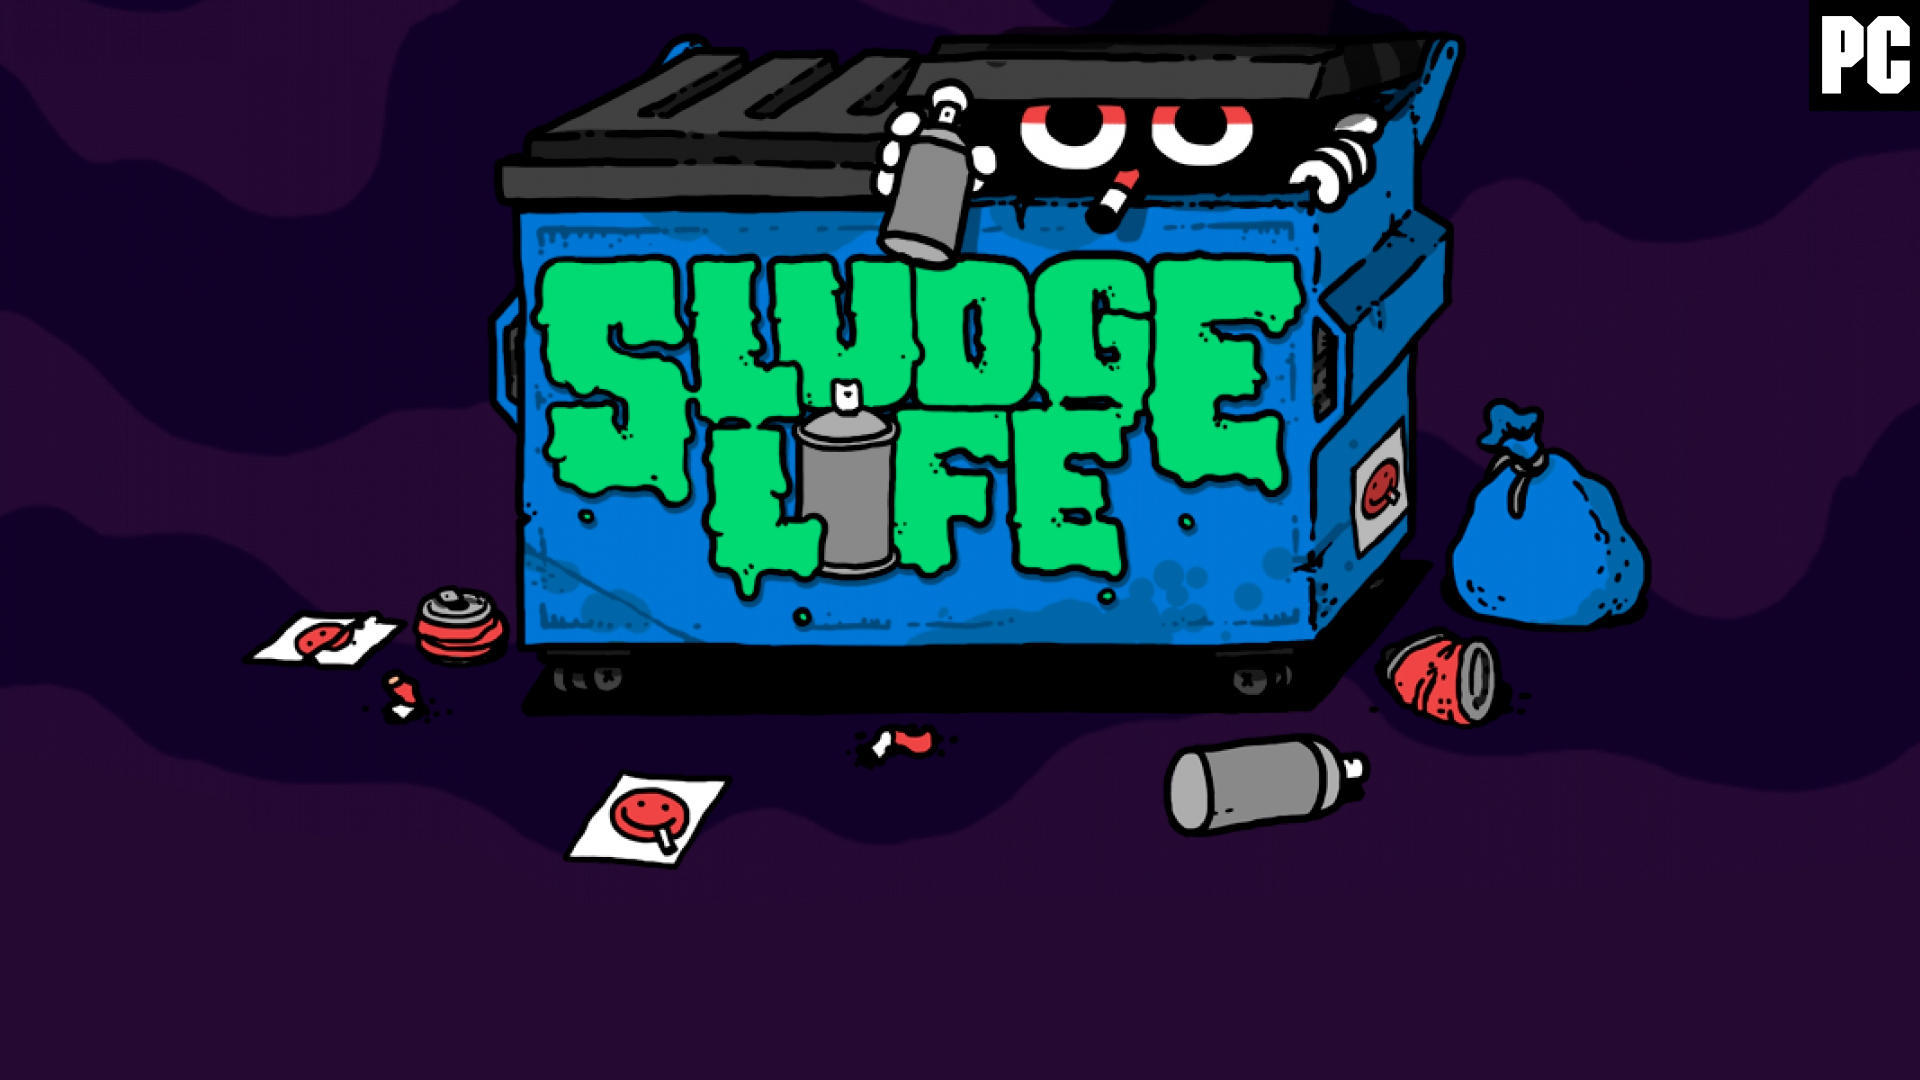 SLUDGE LIFE